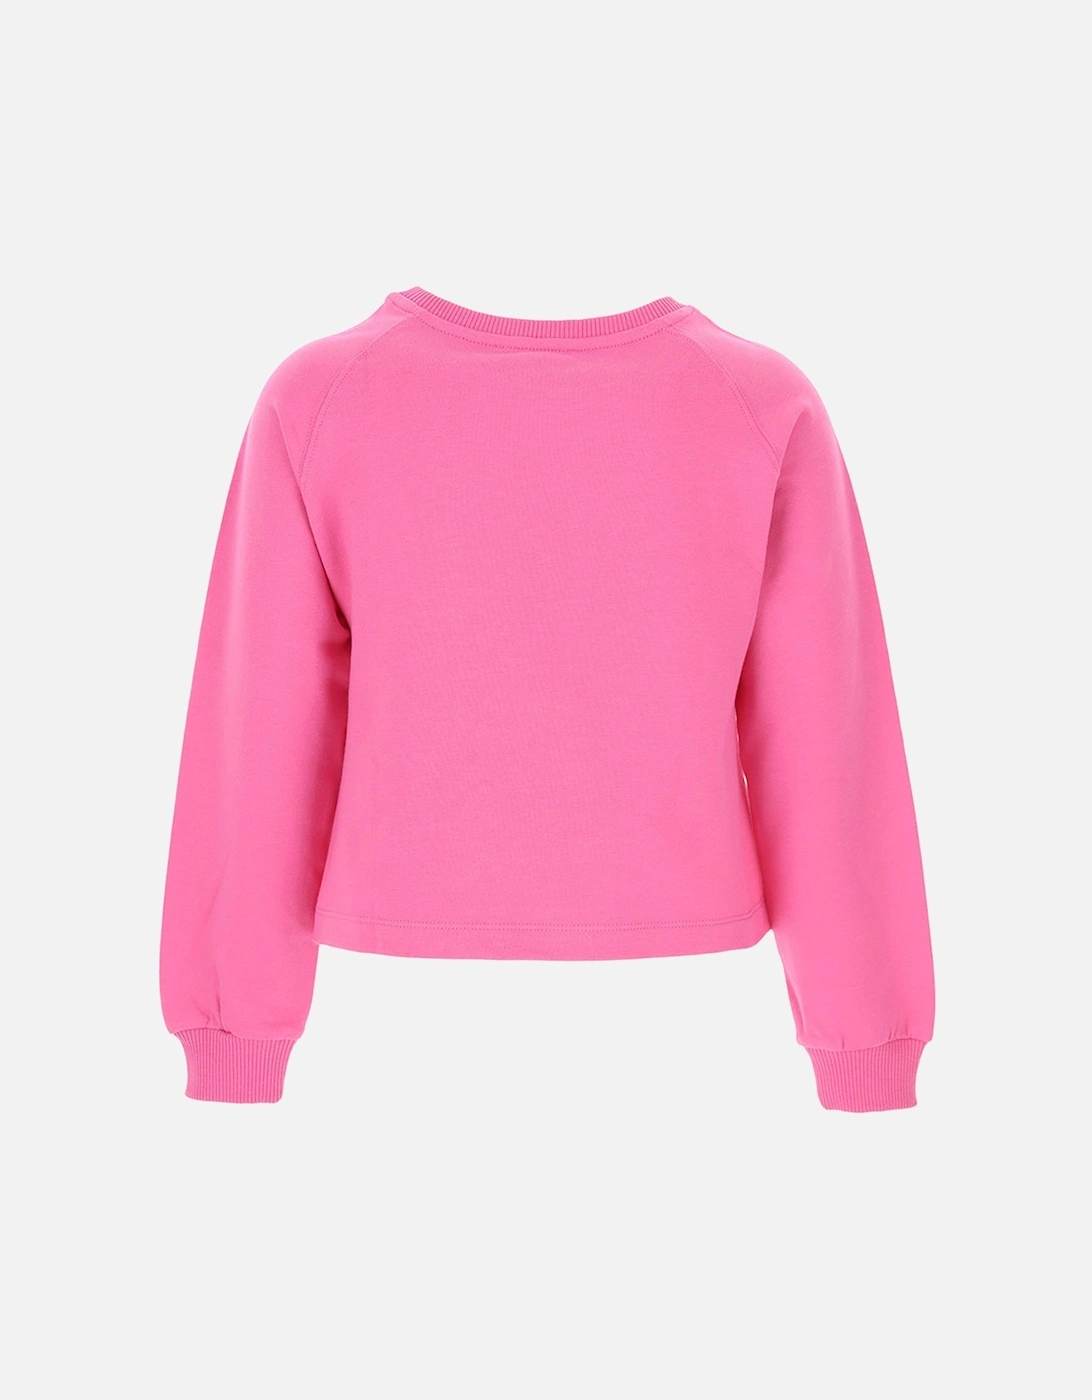 Girls Teddy Hearts Sweater Pink